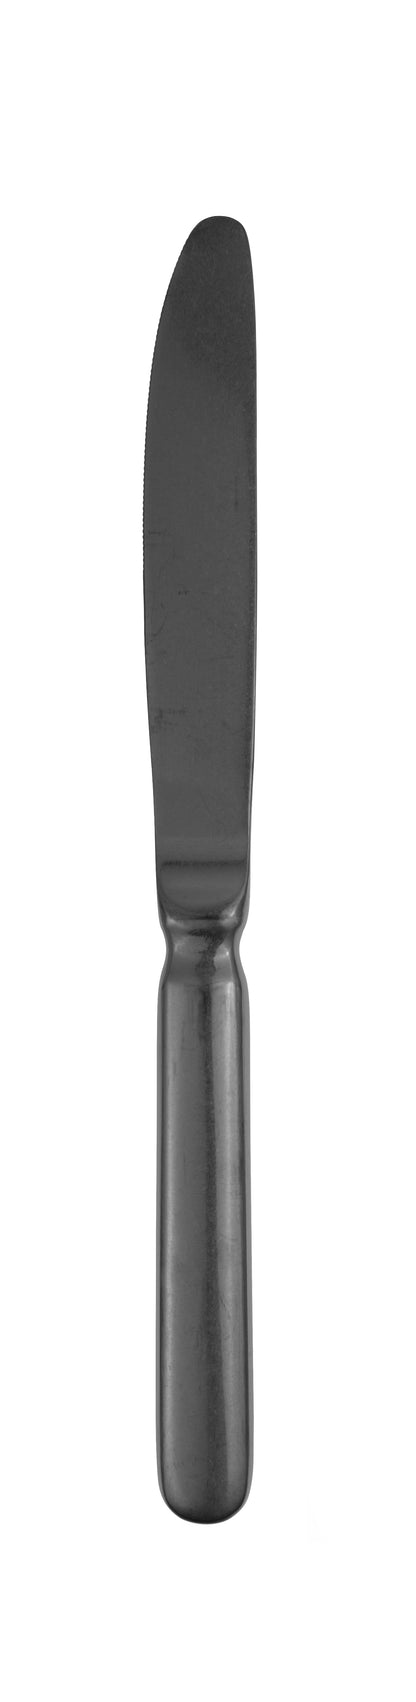 Dessert knife hollow handle BAGUETTE PVD gun metal stonewashed 214mm